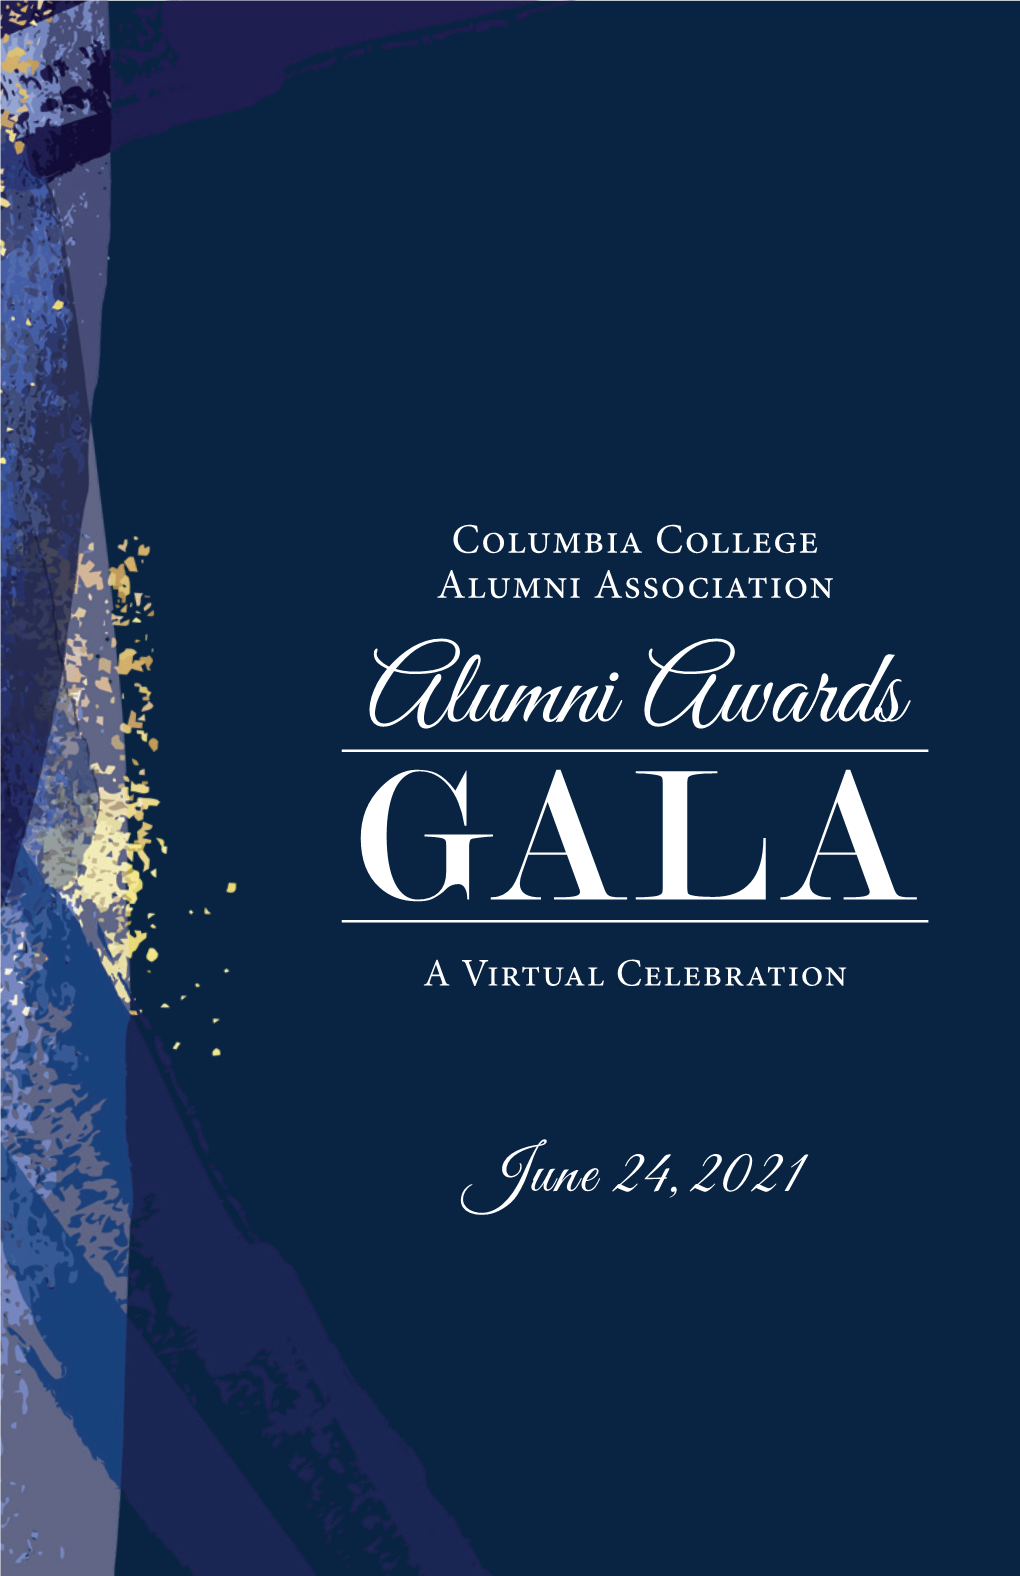 Alumni Awards GALA a Virtual Celebration